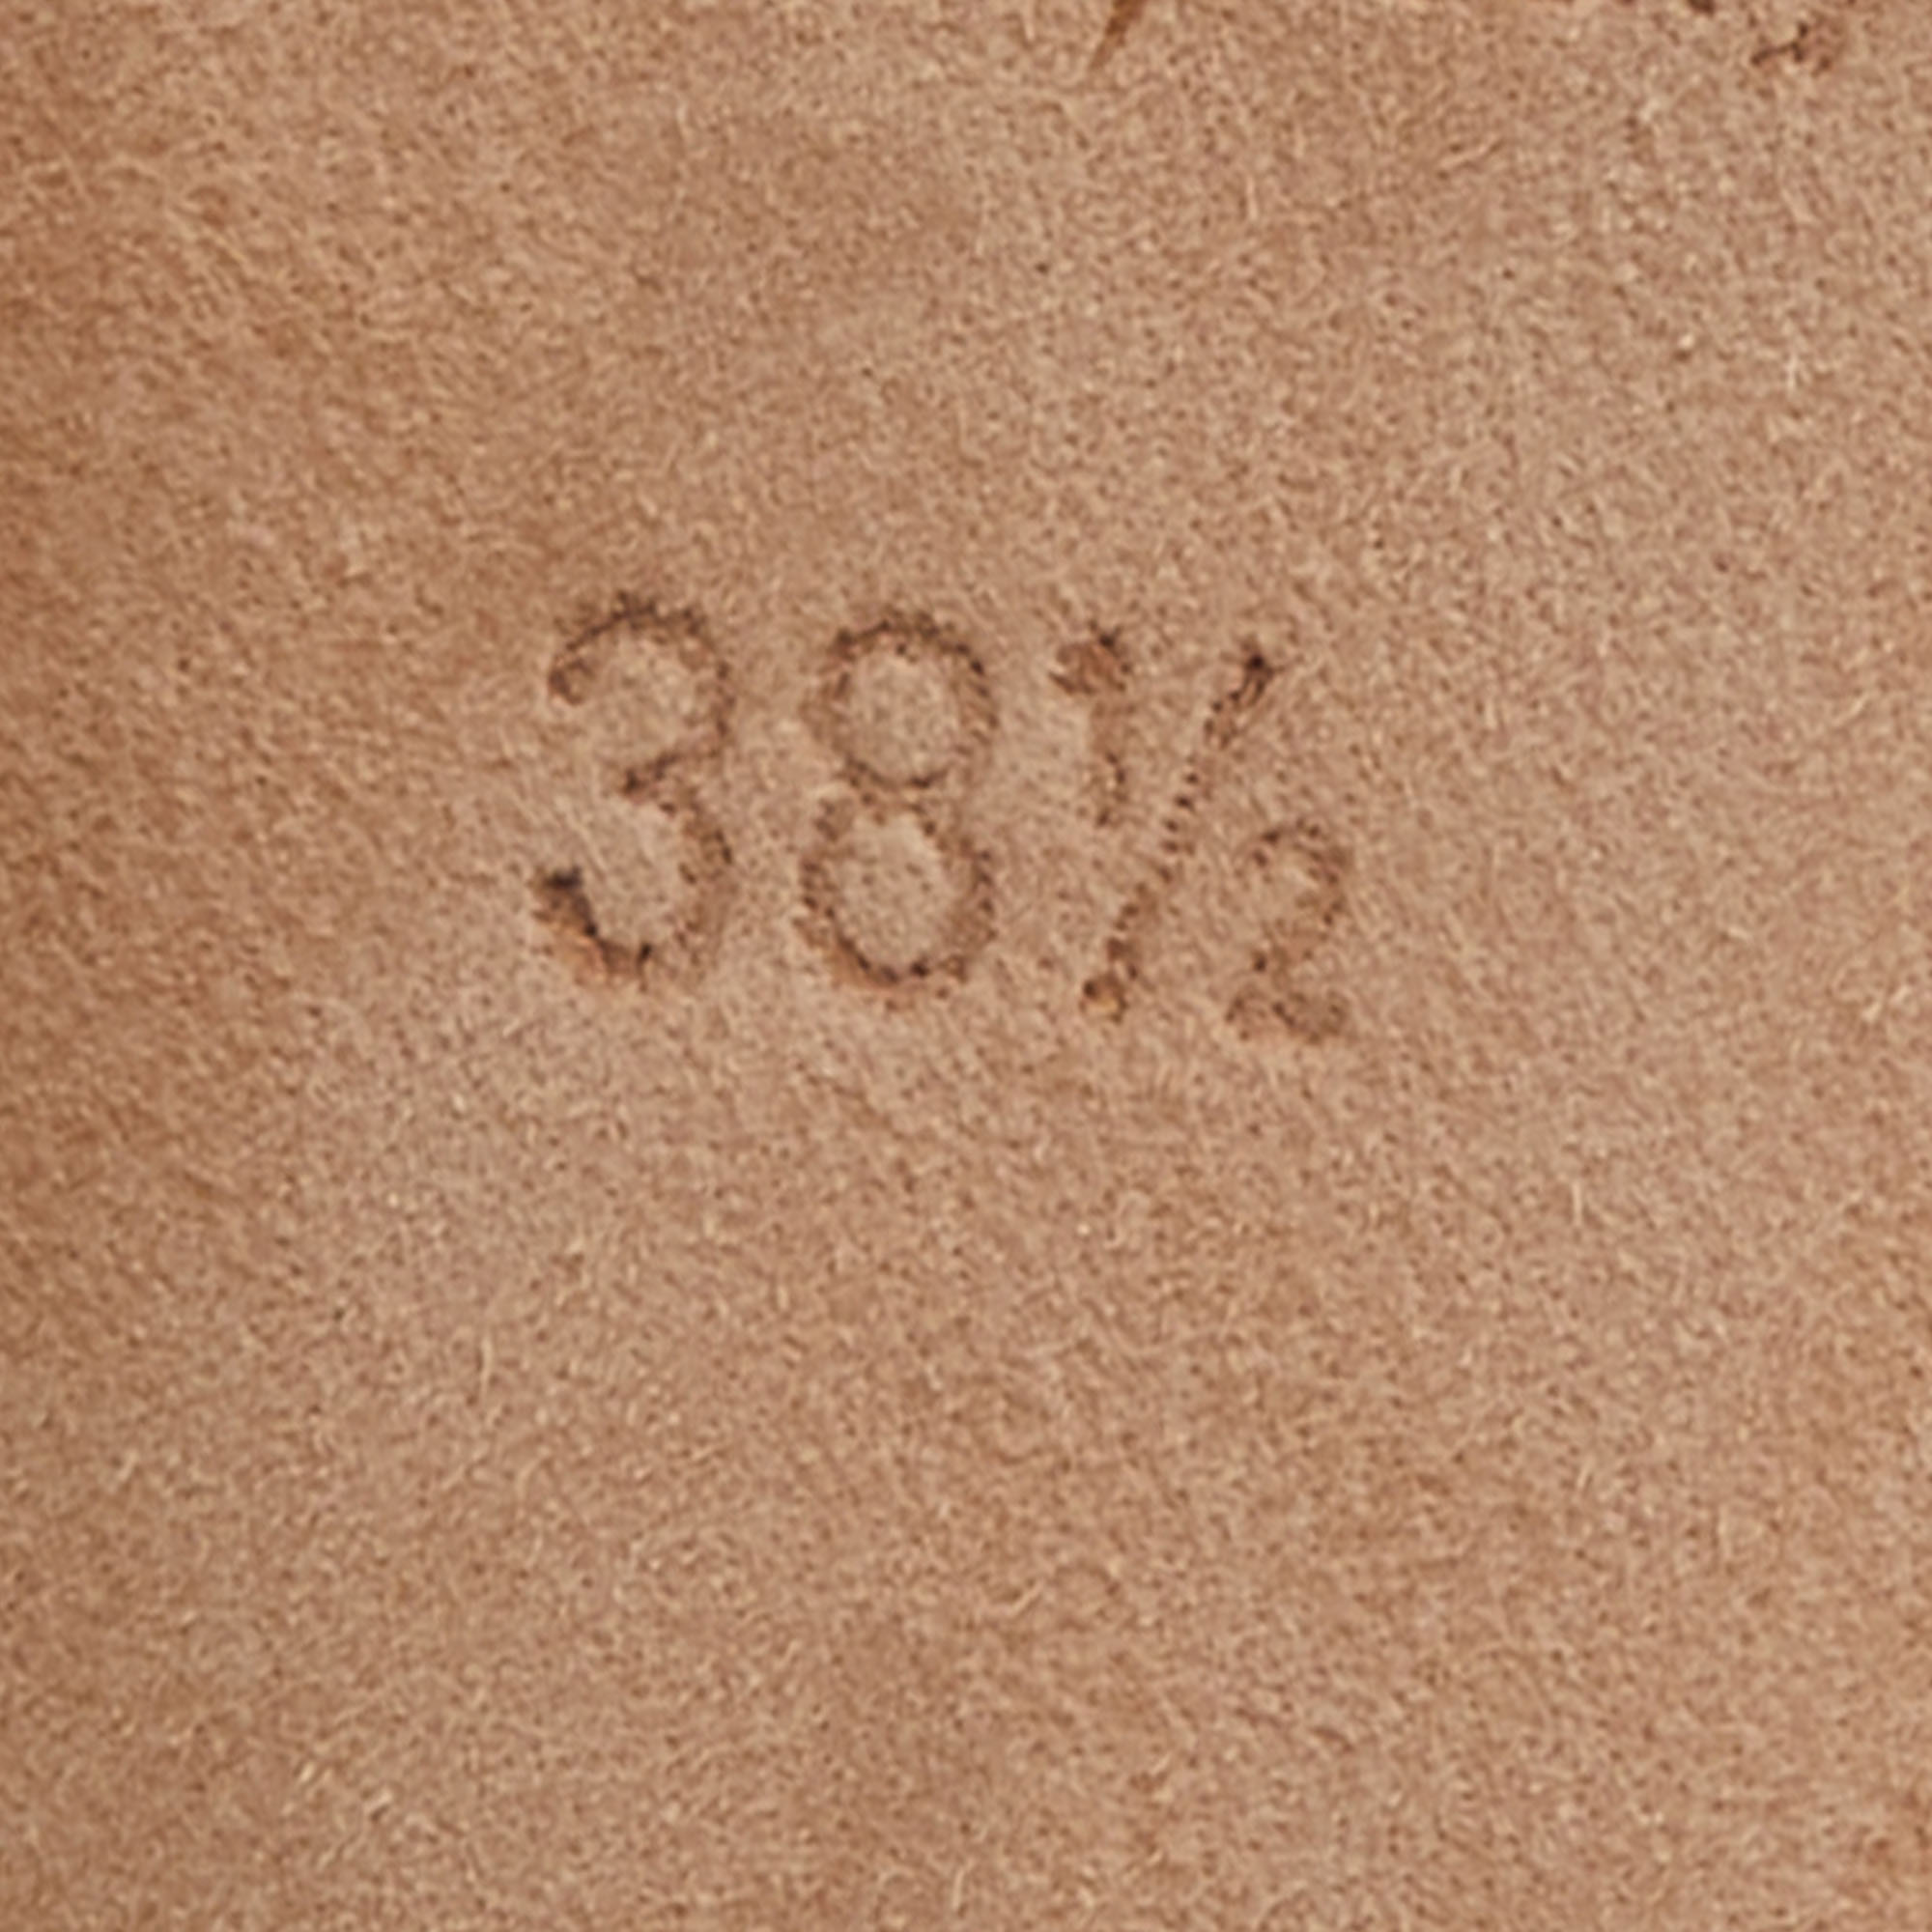 Oscar De La Renta Beige Leather And Mesh Slingback Platform Pumps Size 38.5